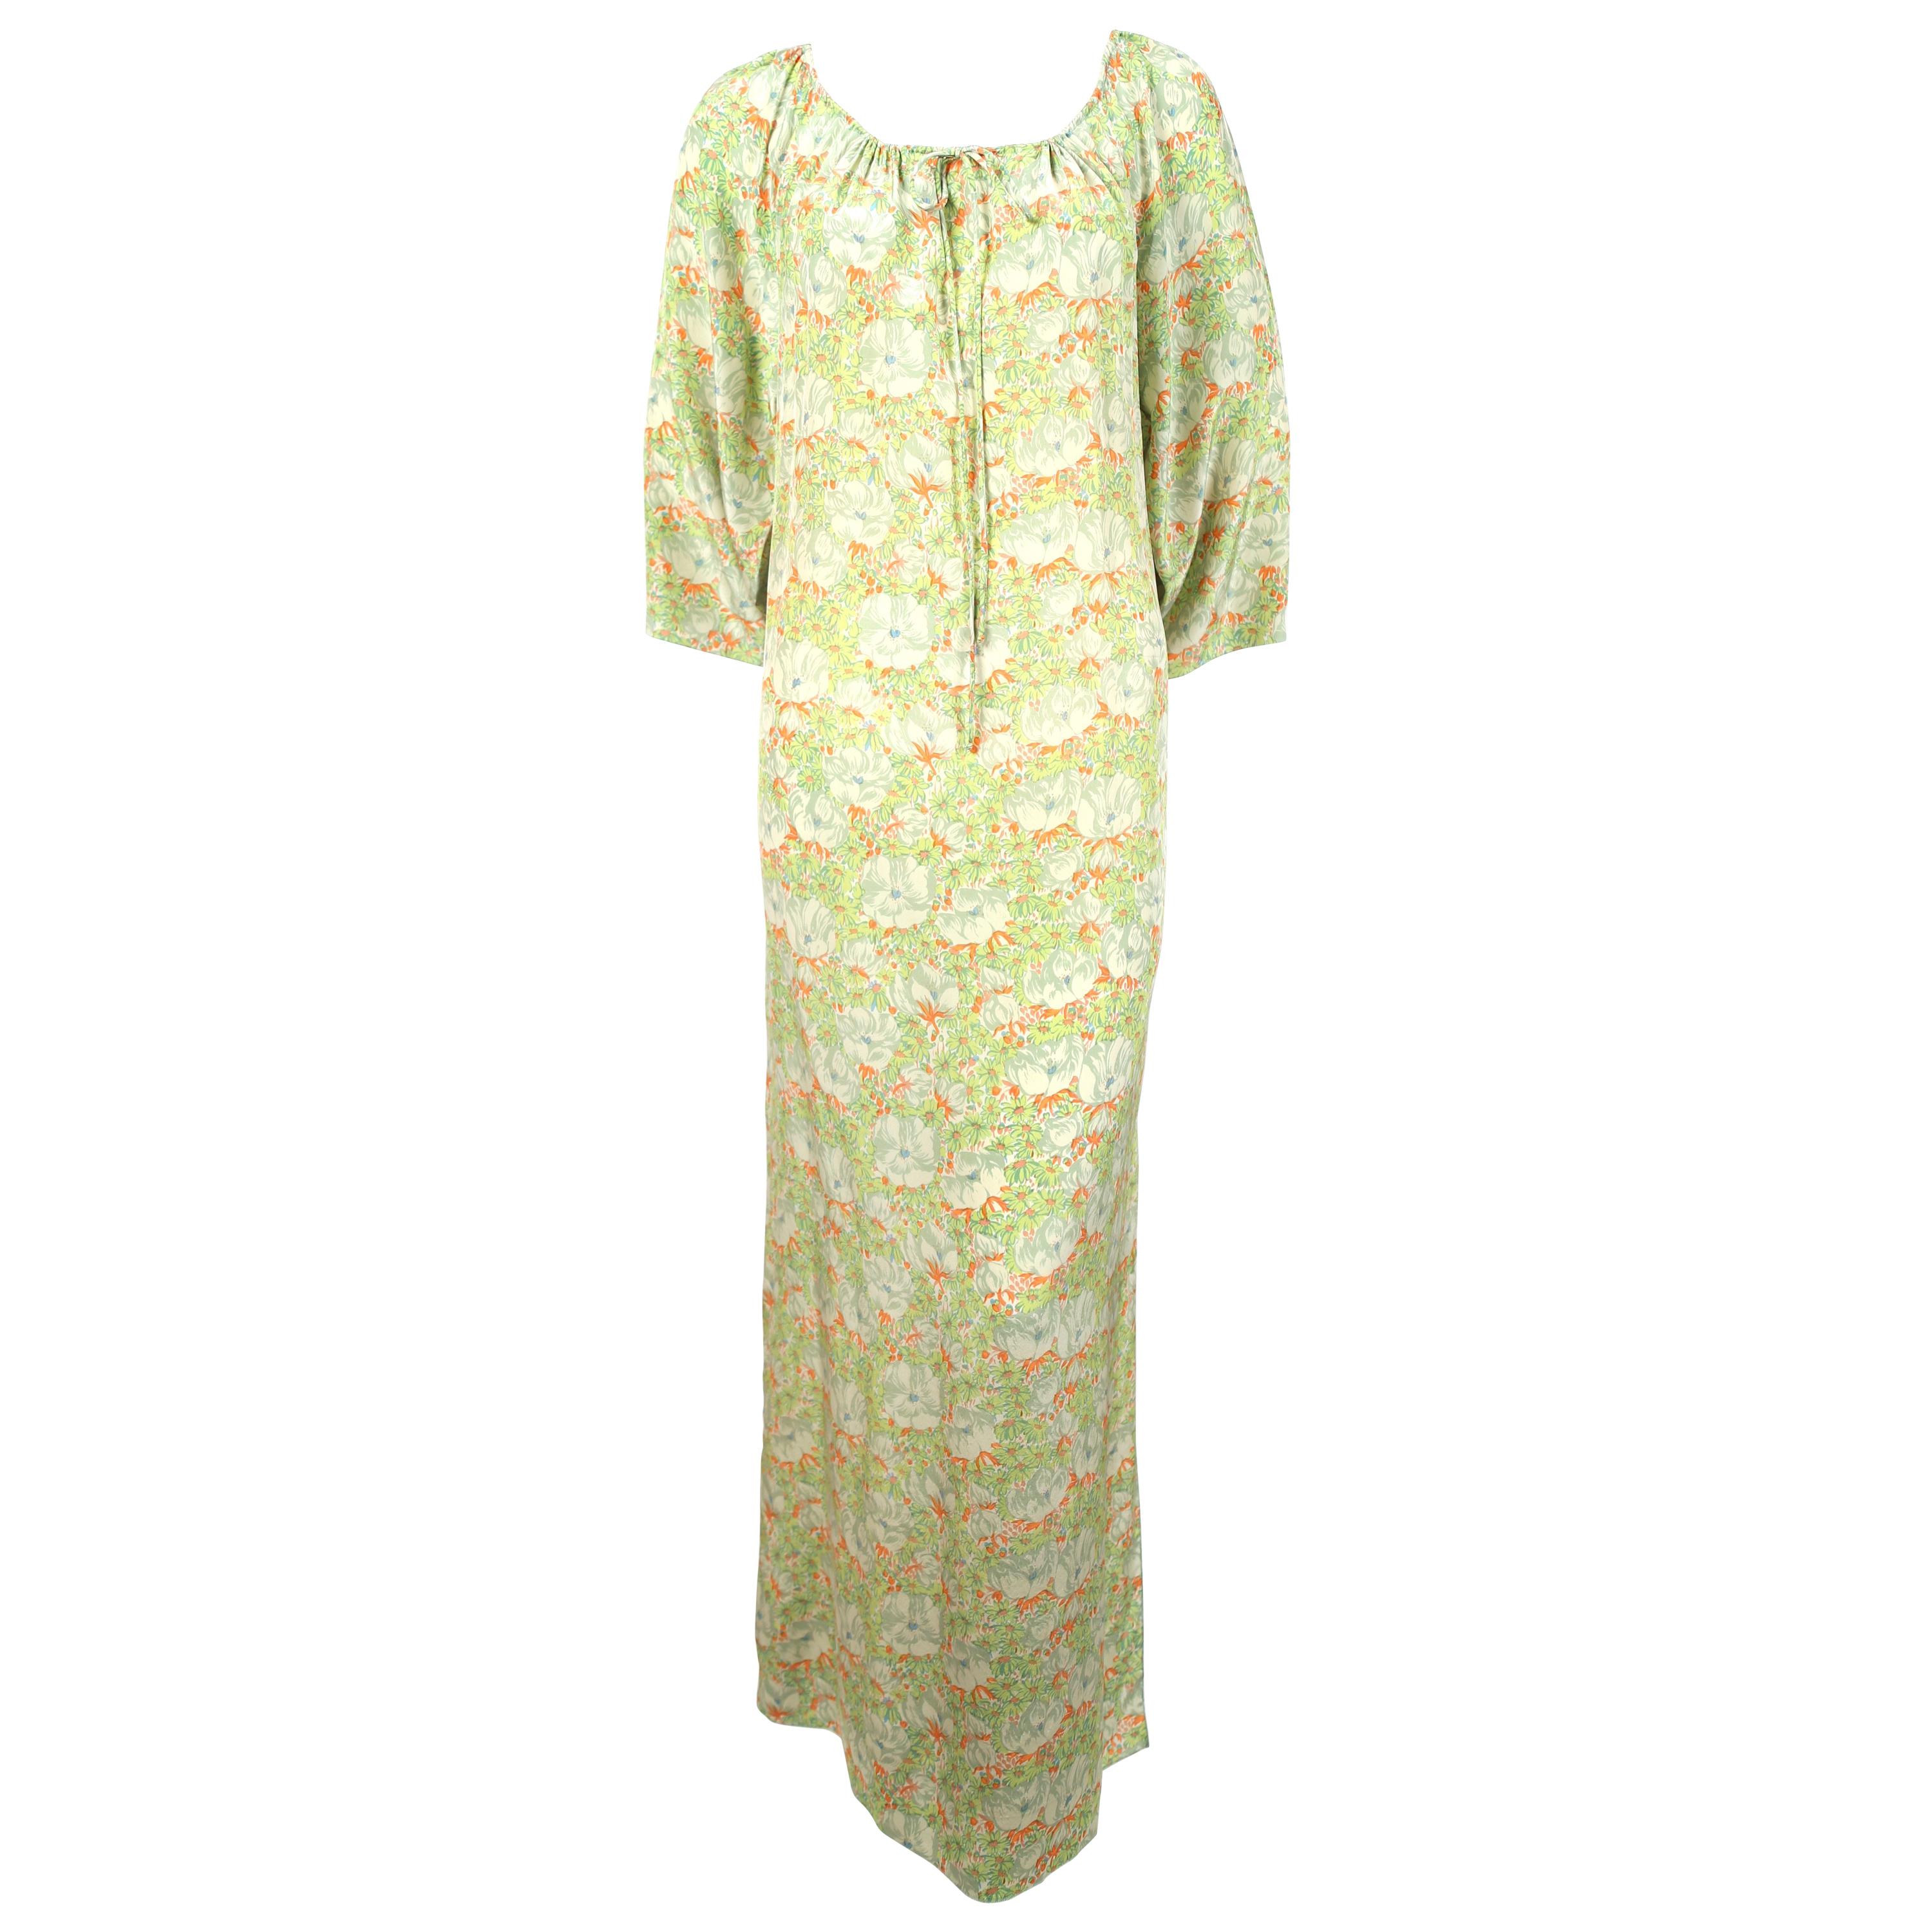 1970's CHRISTIAN DIOR floral printed silk caftan dress